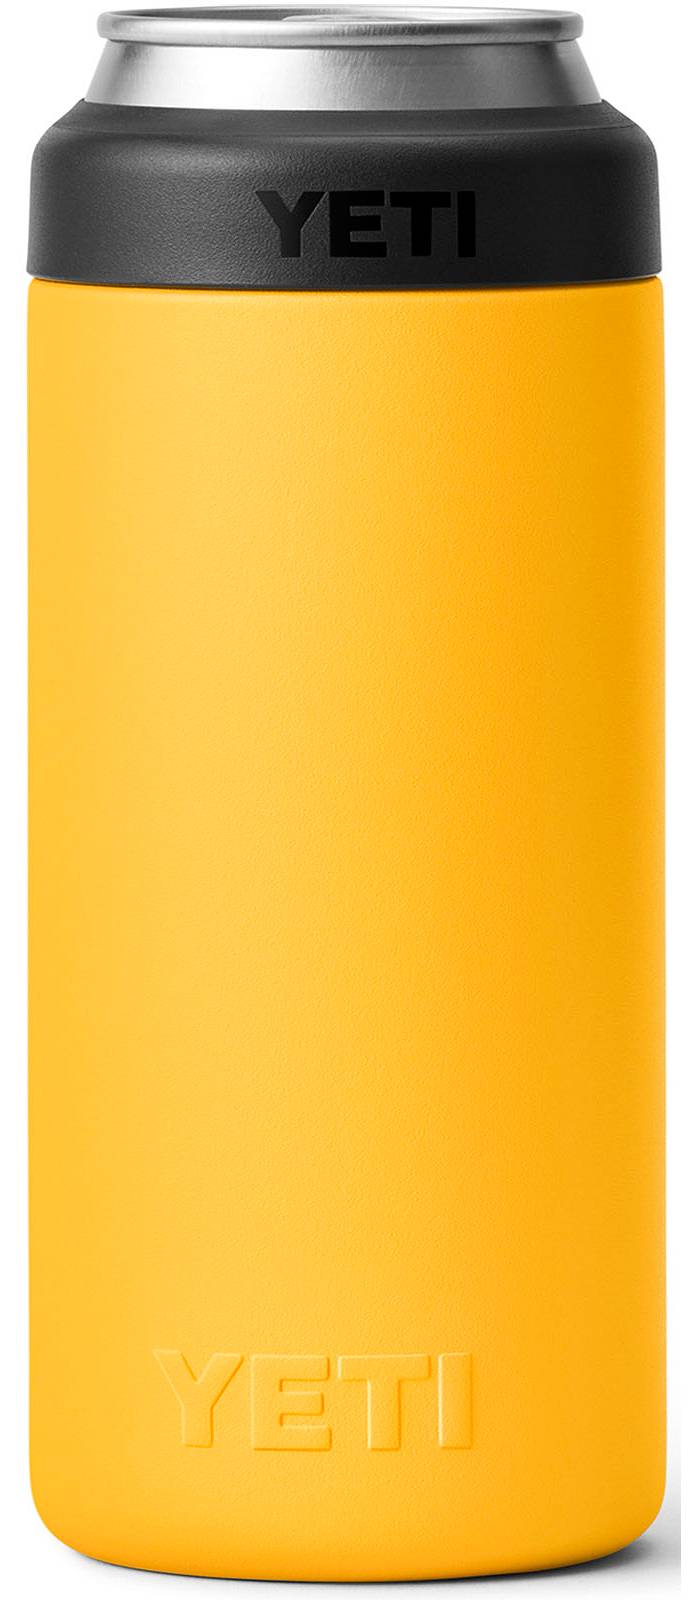 Yeti - 16 oz Rambler Colster Tall Can Insulator Alpine Yellow